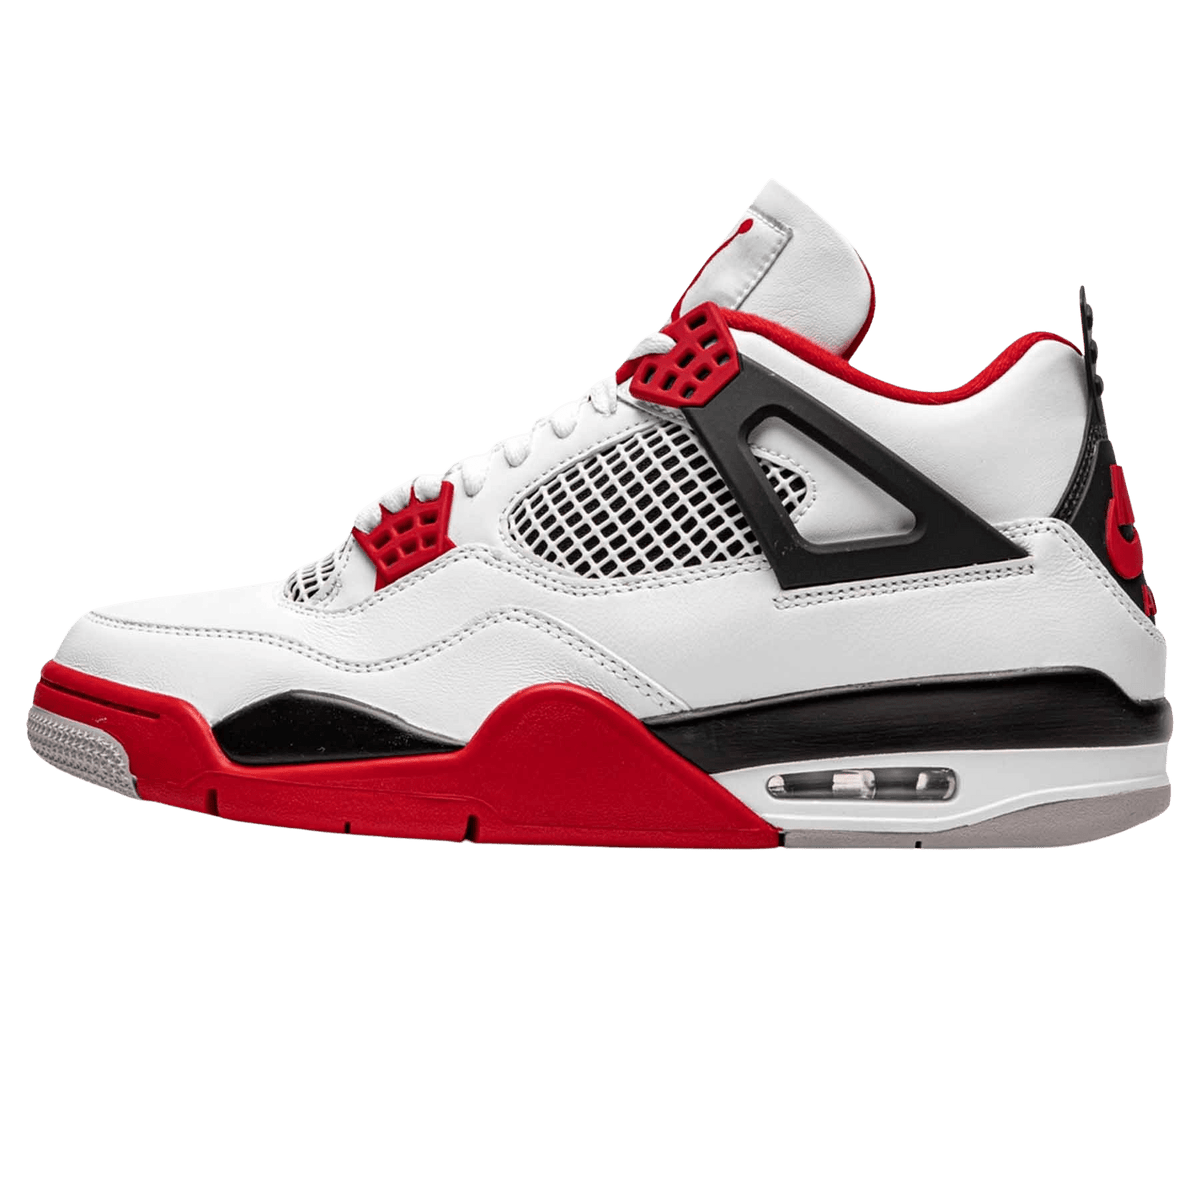 Air Jordan Michael 4 Retro OG 'Fire Red' 2020 - Kick Basketball